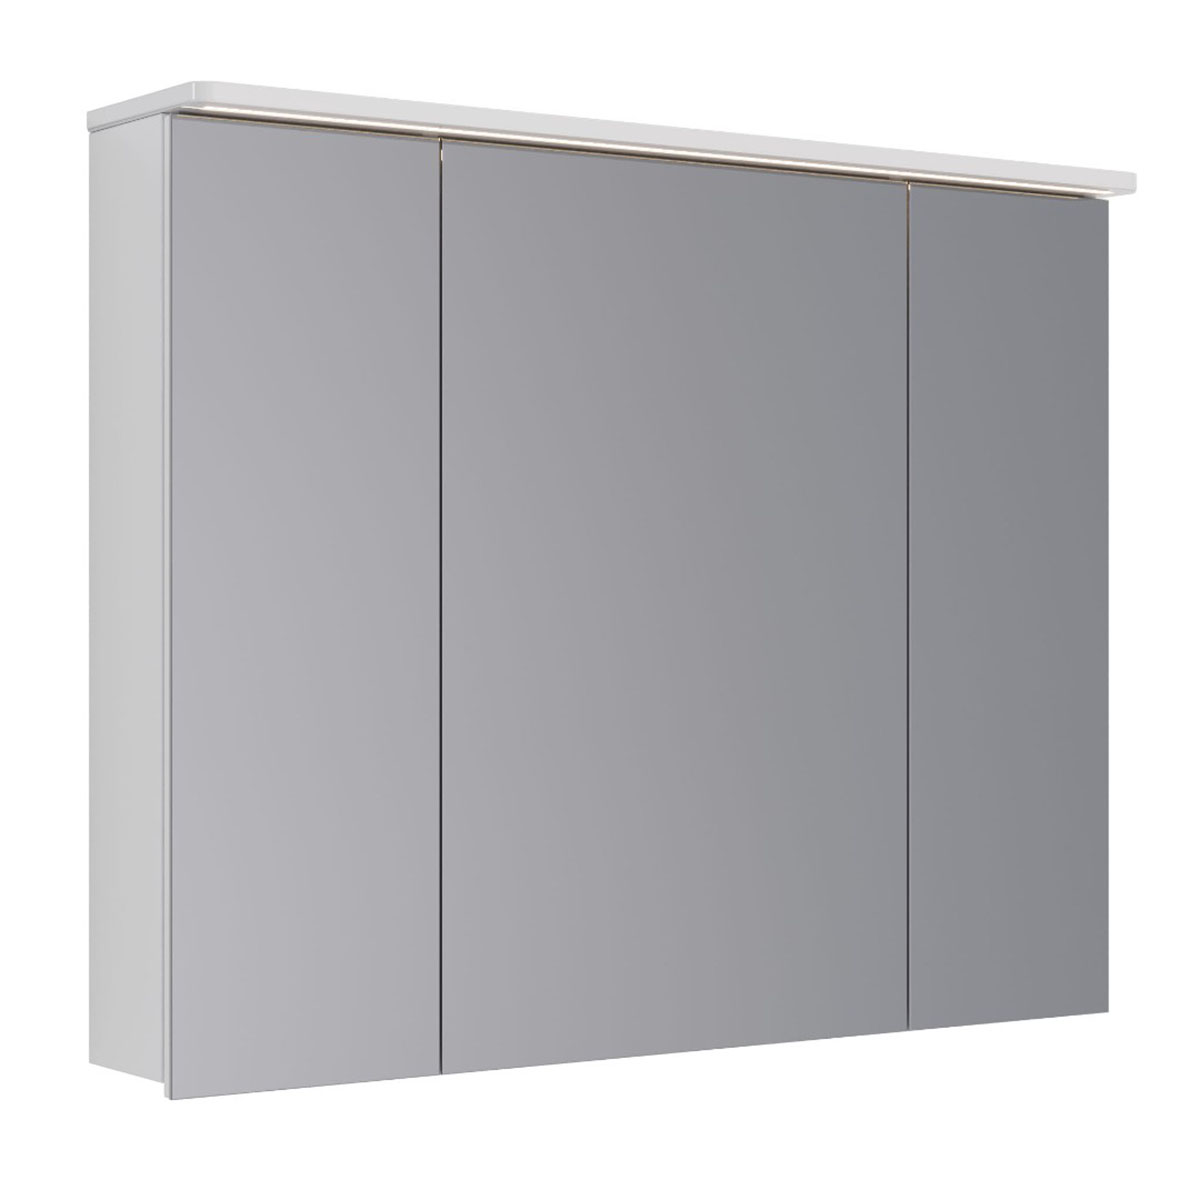 Шкаф зеркальный Lemark ZENON 100х80 см 3-х дверный, с козырьком-подсветкой, с розеткой, цвет корпуса: Белый глянец